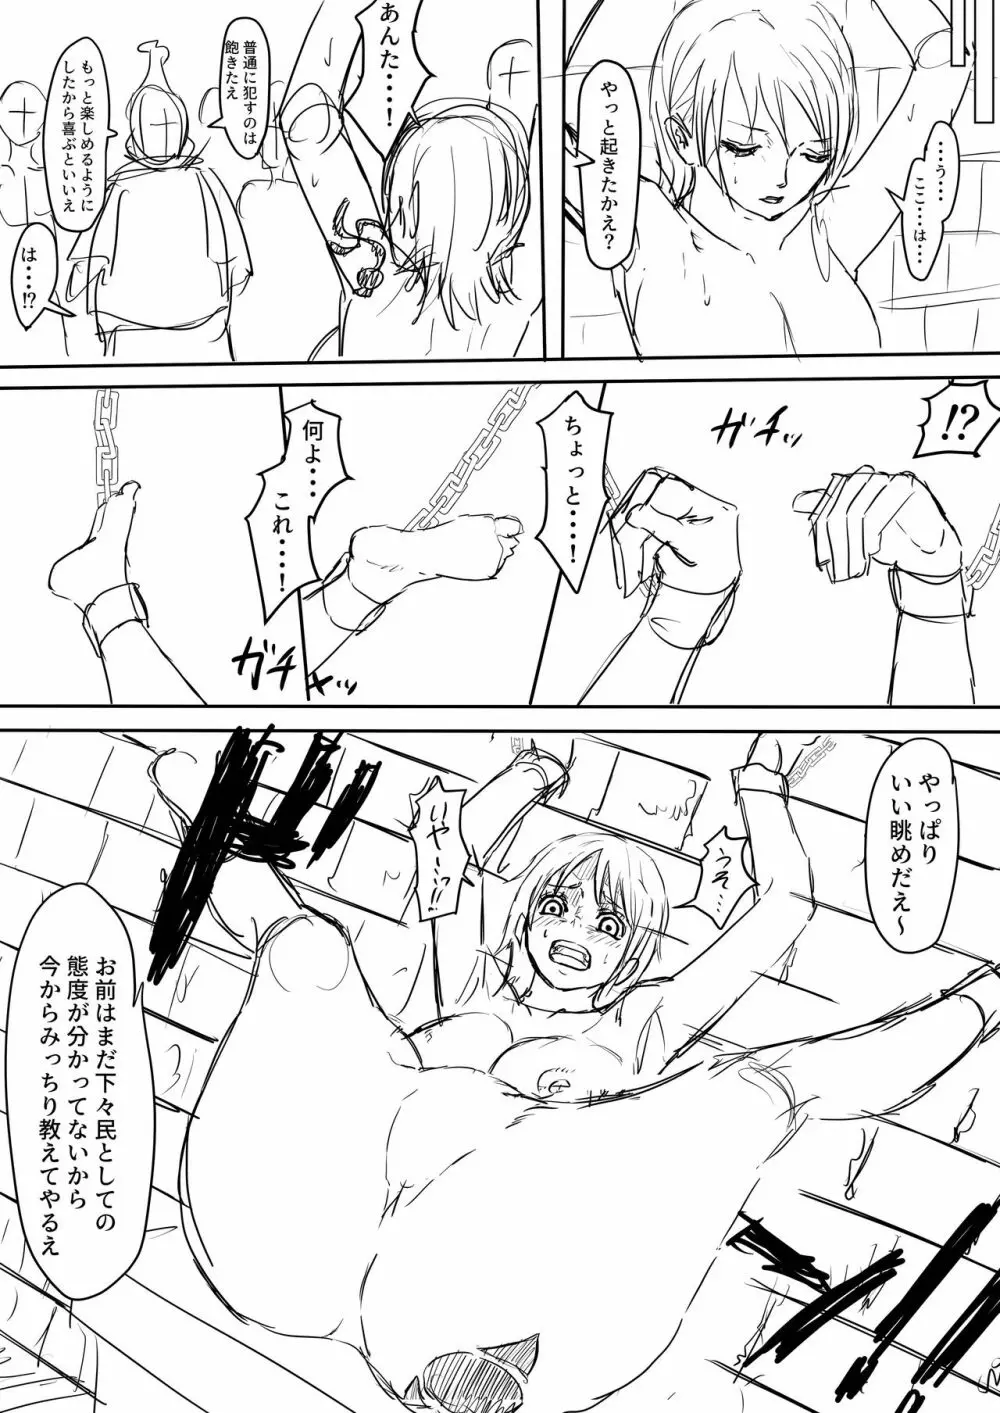 [Iwao] Nami H Manga (One Piece) Updated Page.7